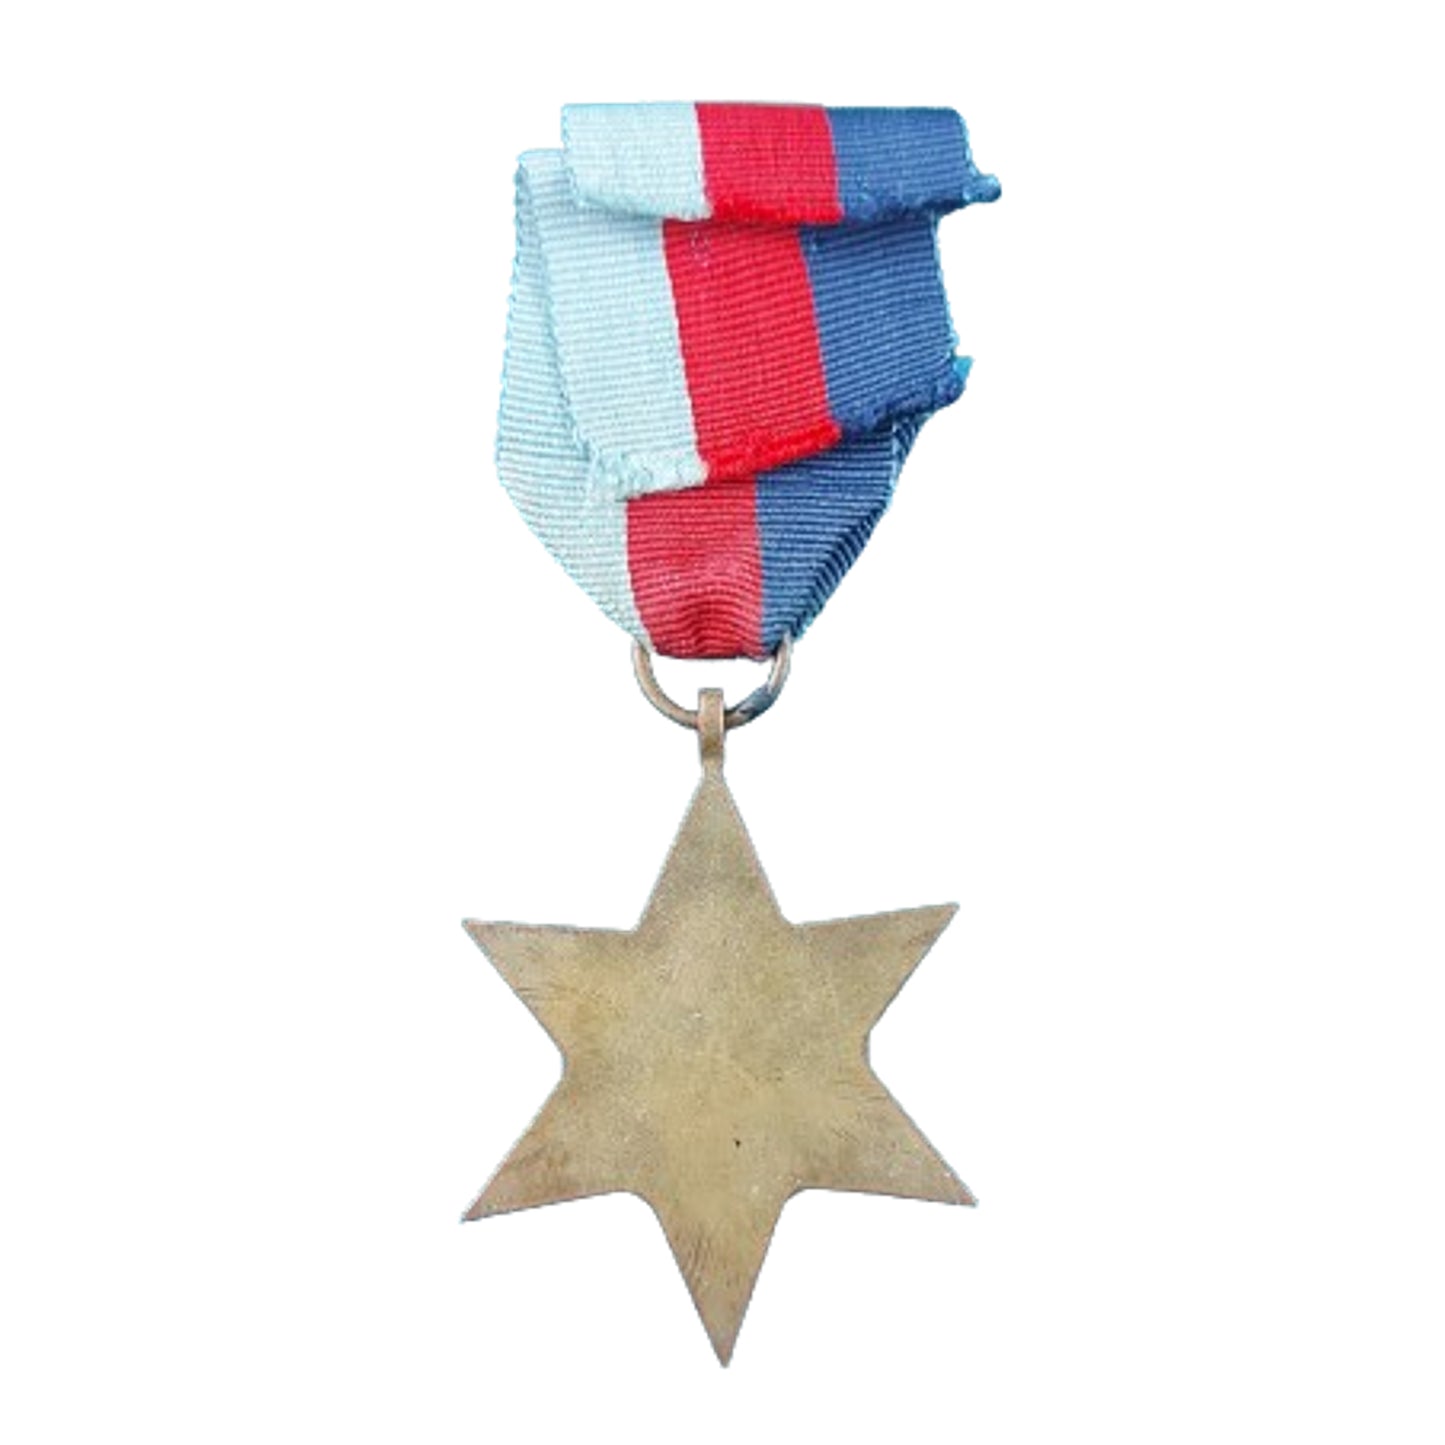 WW2 Canadian Medal -1939-1945 Star